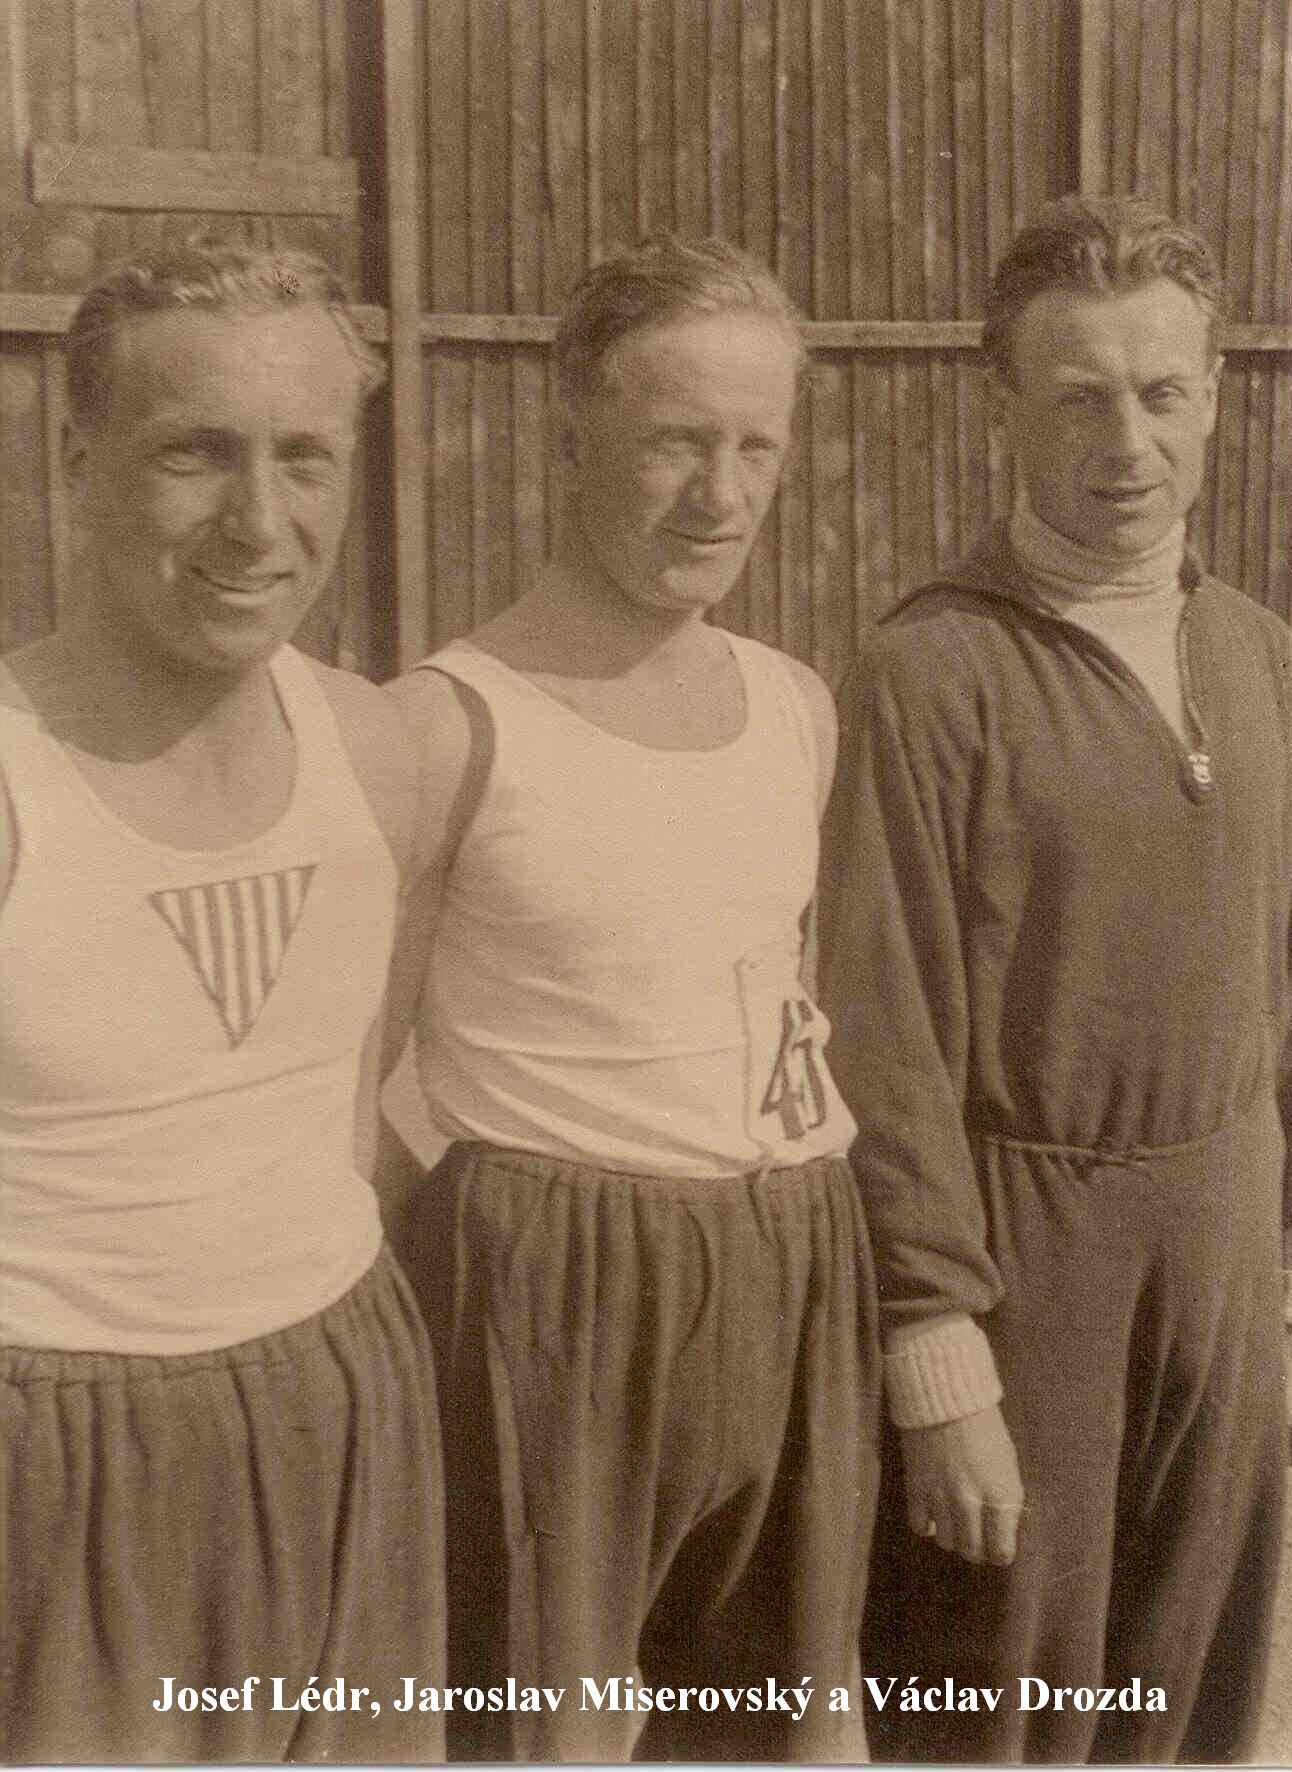 1933: Josef Lédr, Jaroslav Miserovský a Václav Drozda